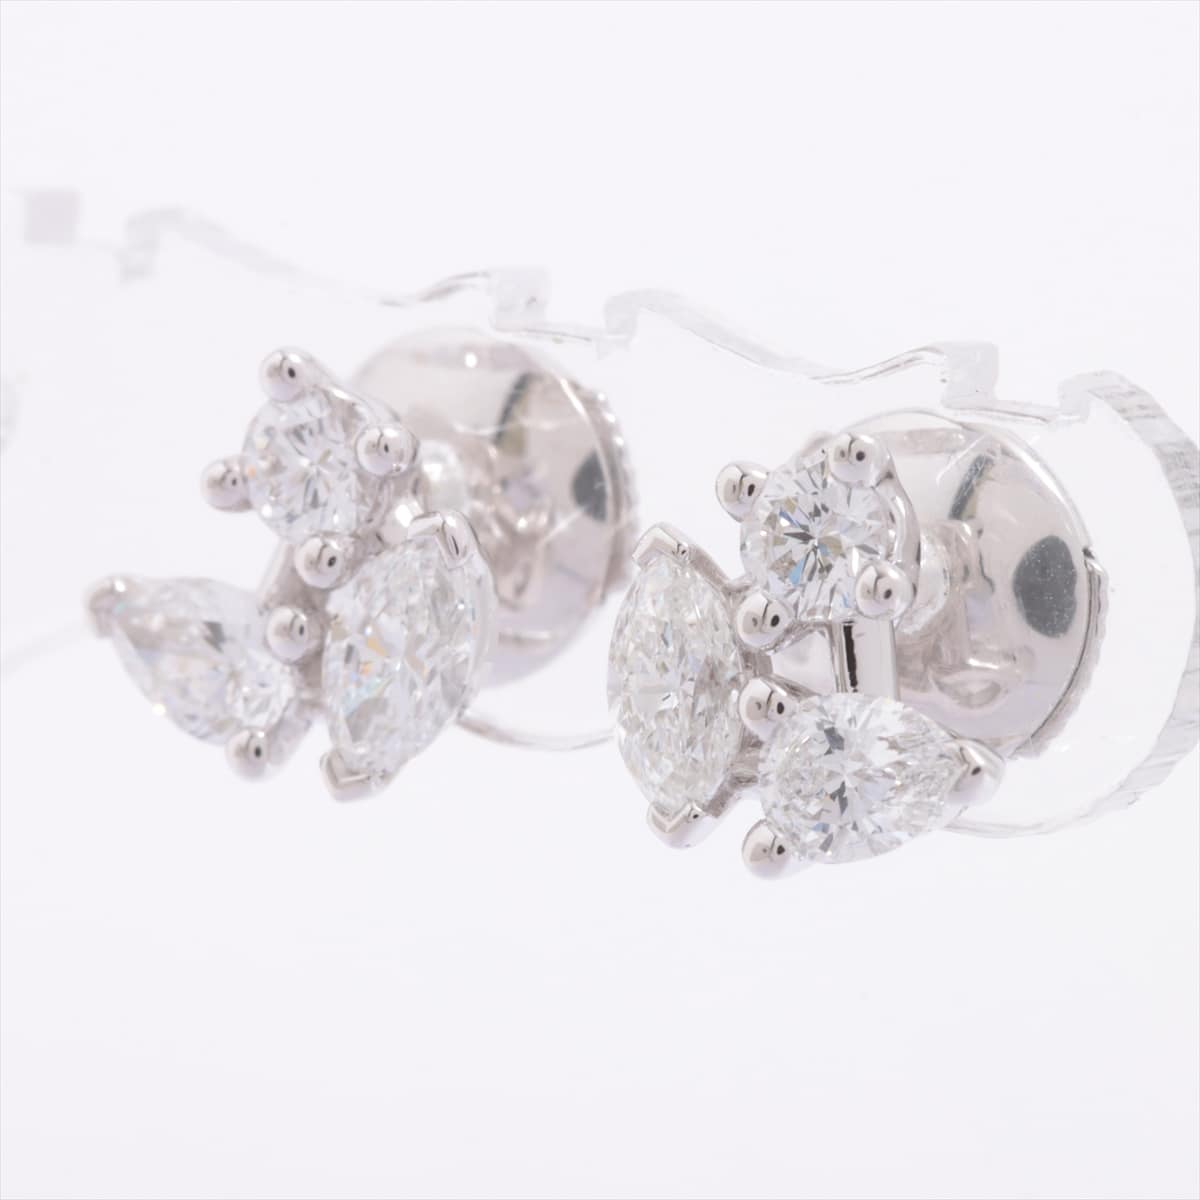 Cartier Blossom diamond Piercing jewelry 750 WG 2.6g